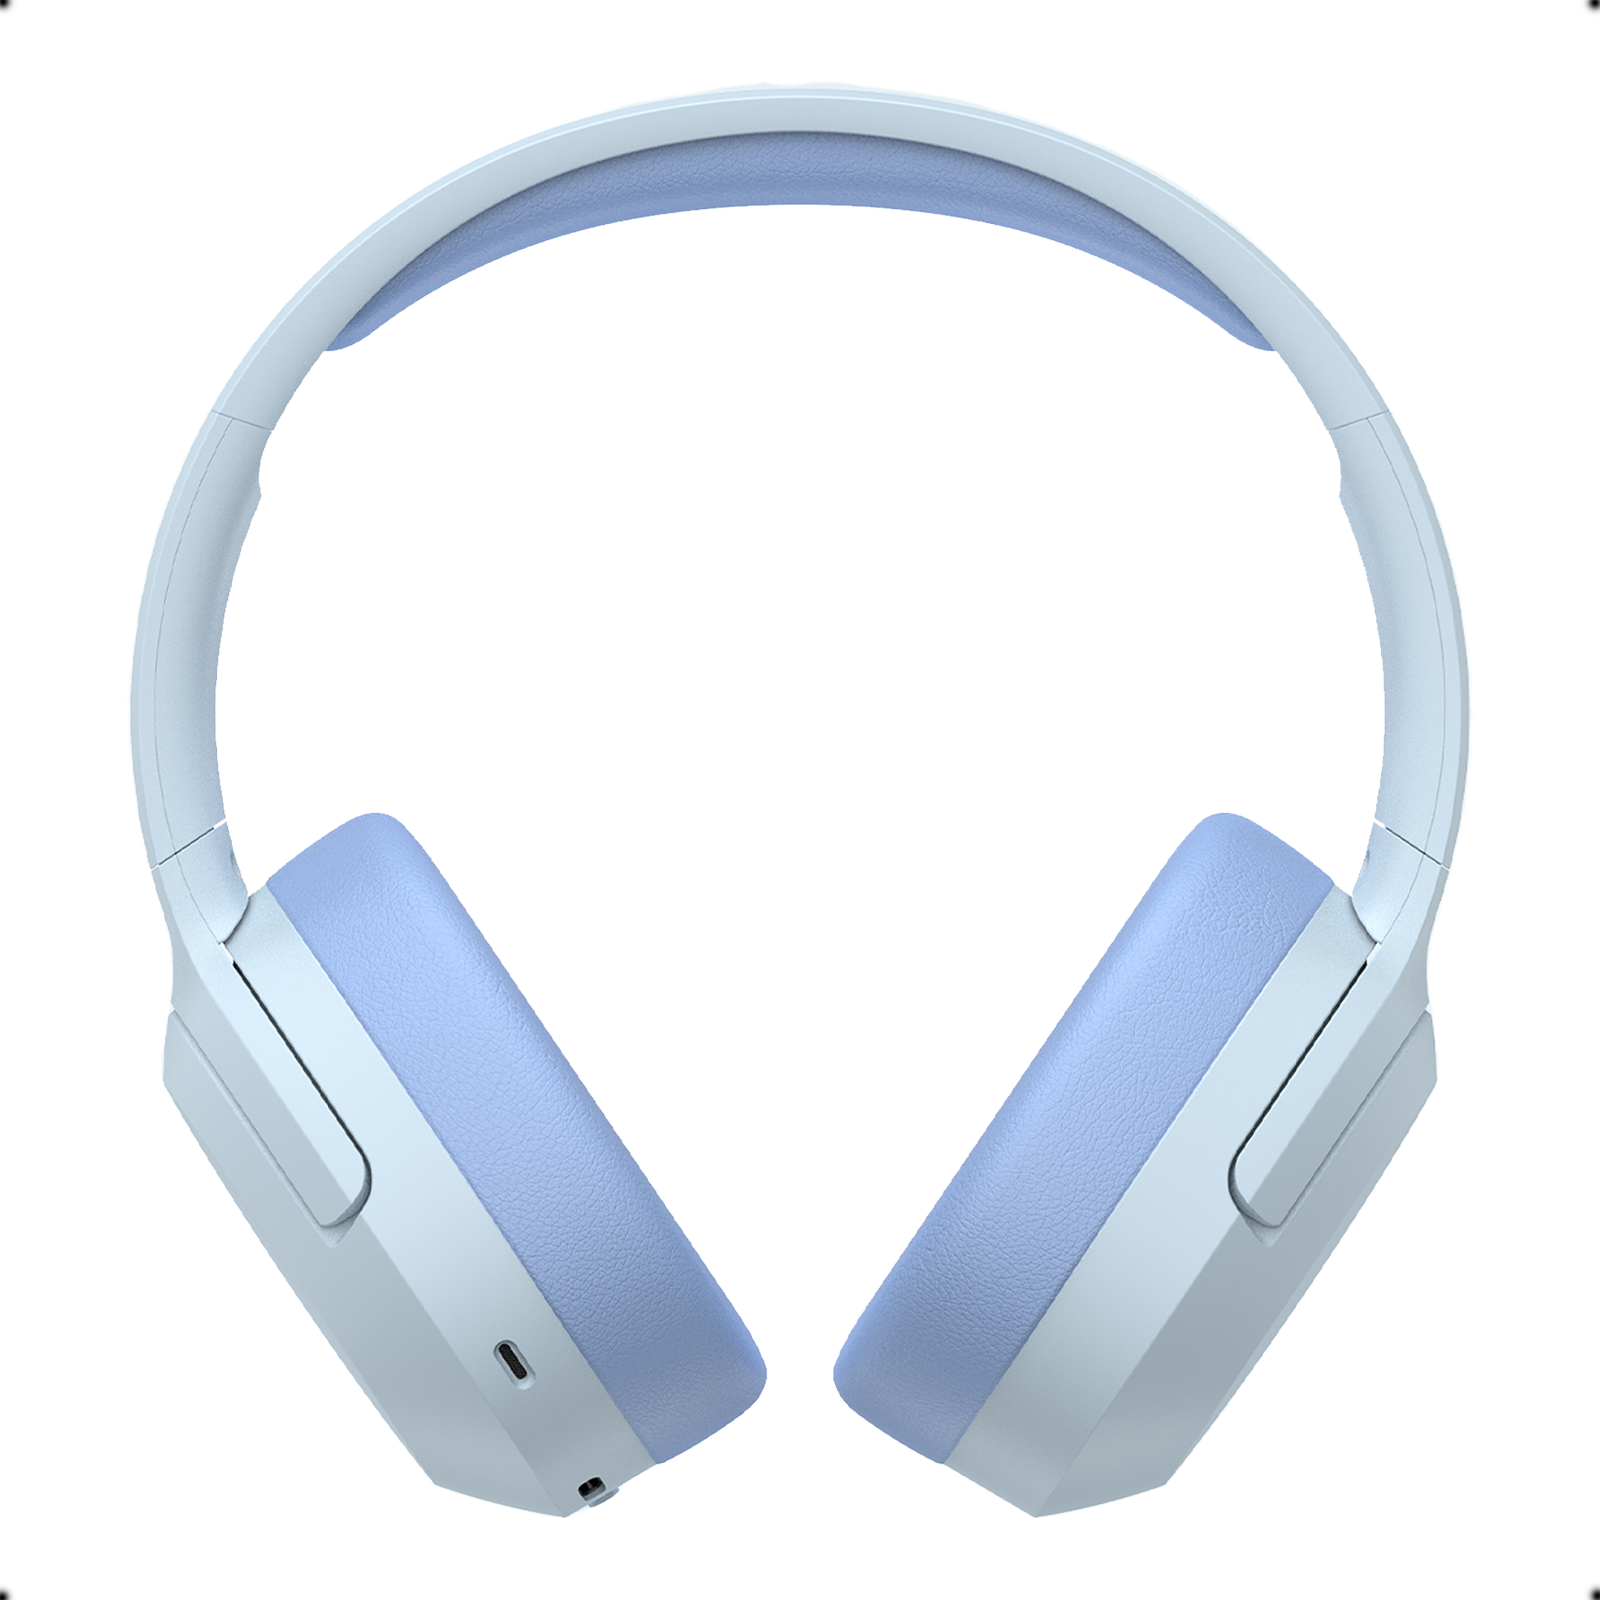 W820NB Plus kabellose Over-Ear-Kopfhörer mit Geräuschunterdrückung 